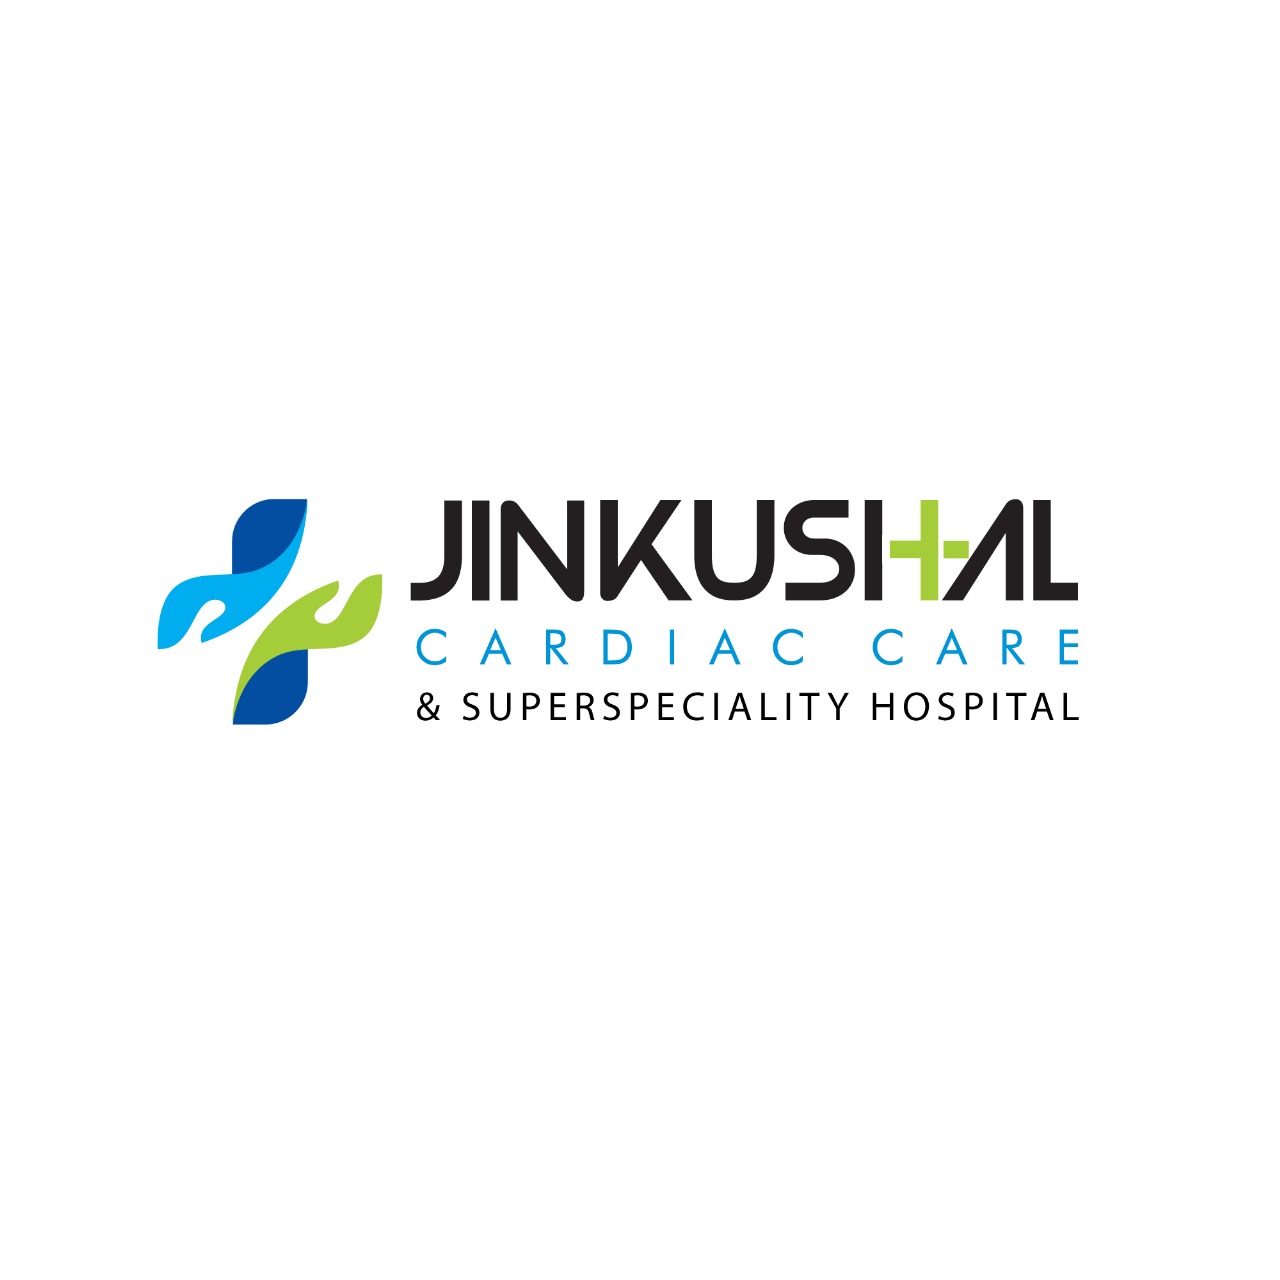 Jinkushal Cardiac Care & Superspeciality Hospital|Diagnostic centre|Medical Services